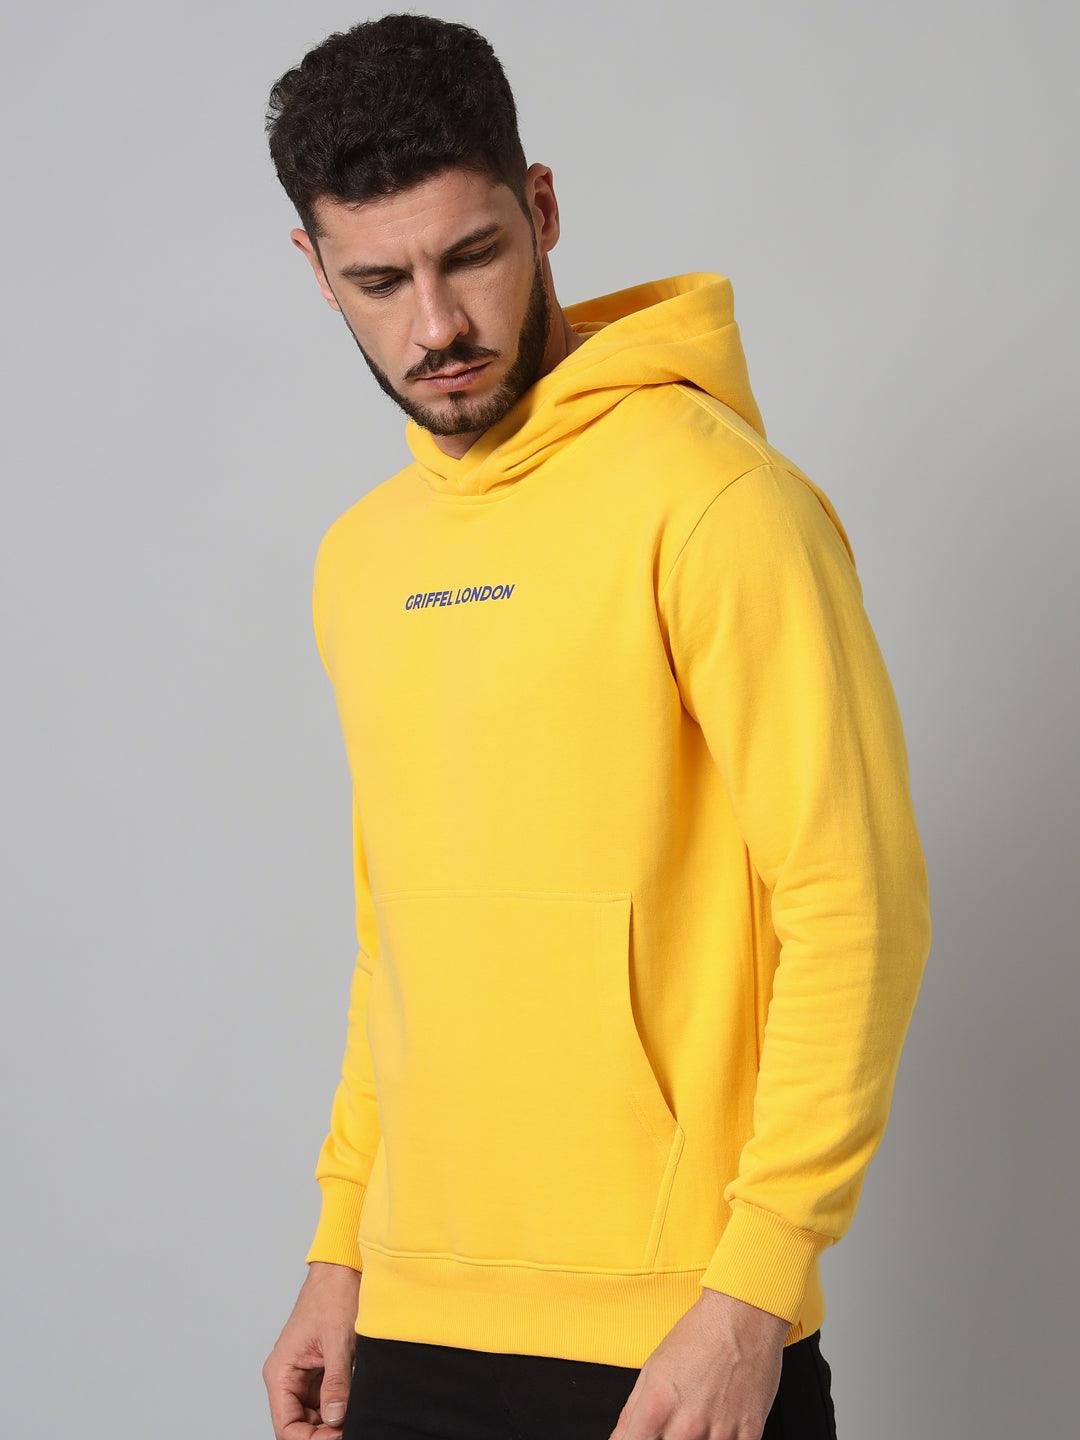 Griffel Men's Yellow Cotton Front Logo Fleece Hoody Sweatshirt with Full Sleeve - griffel